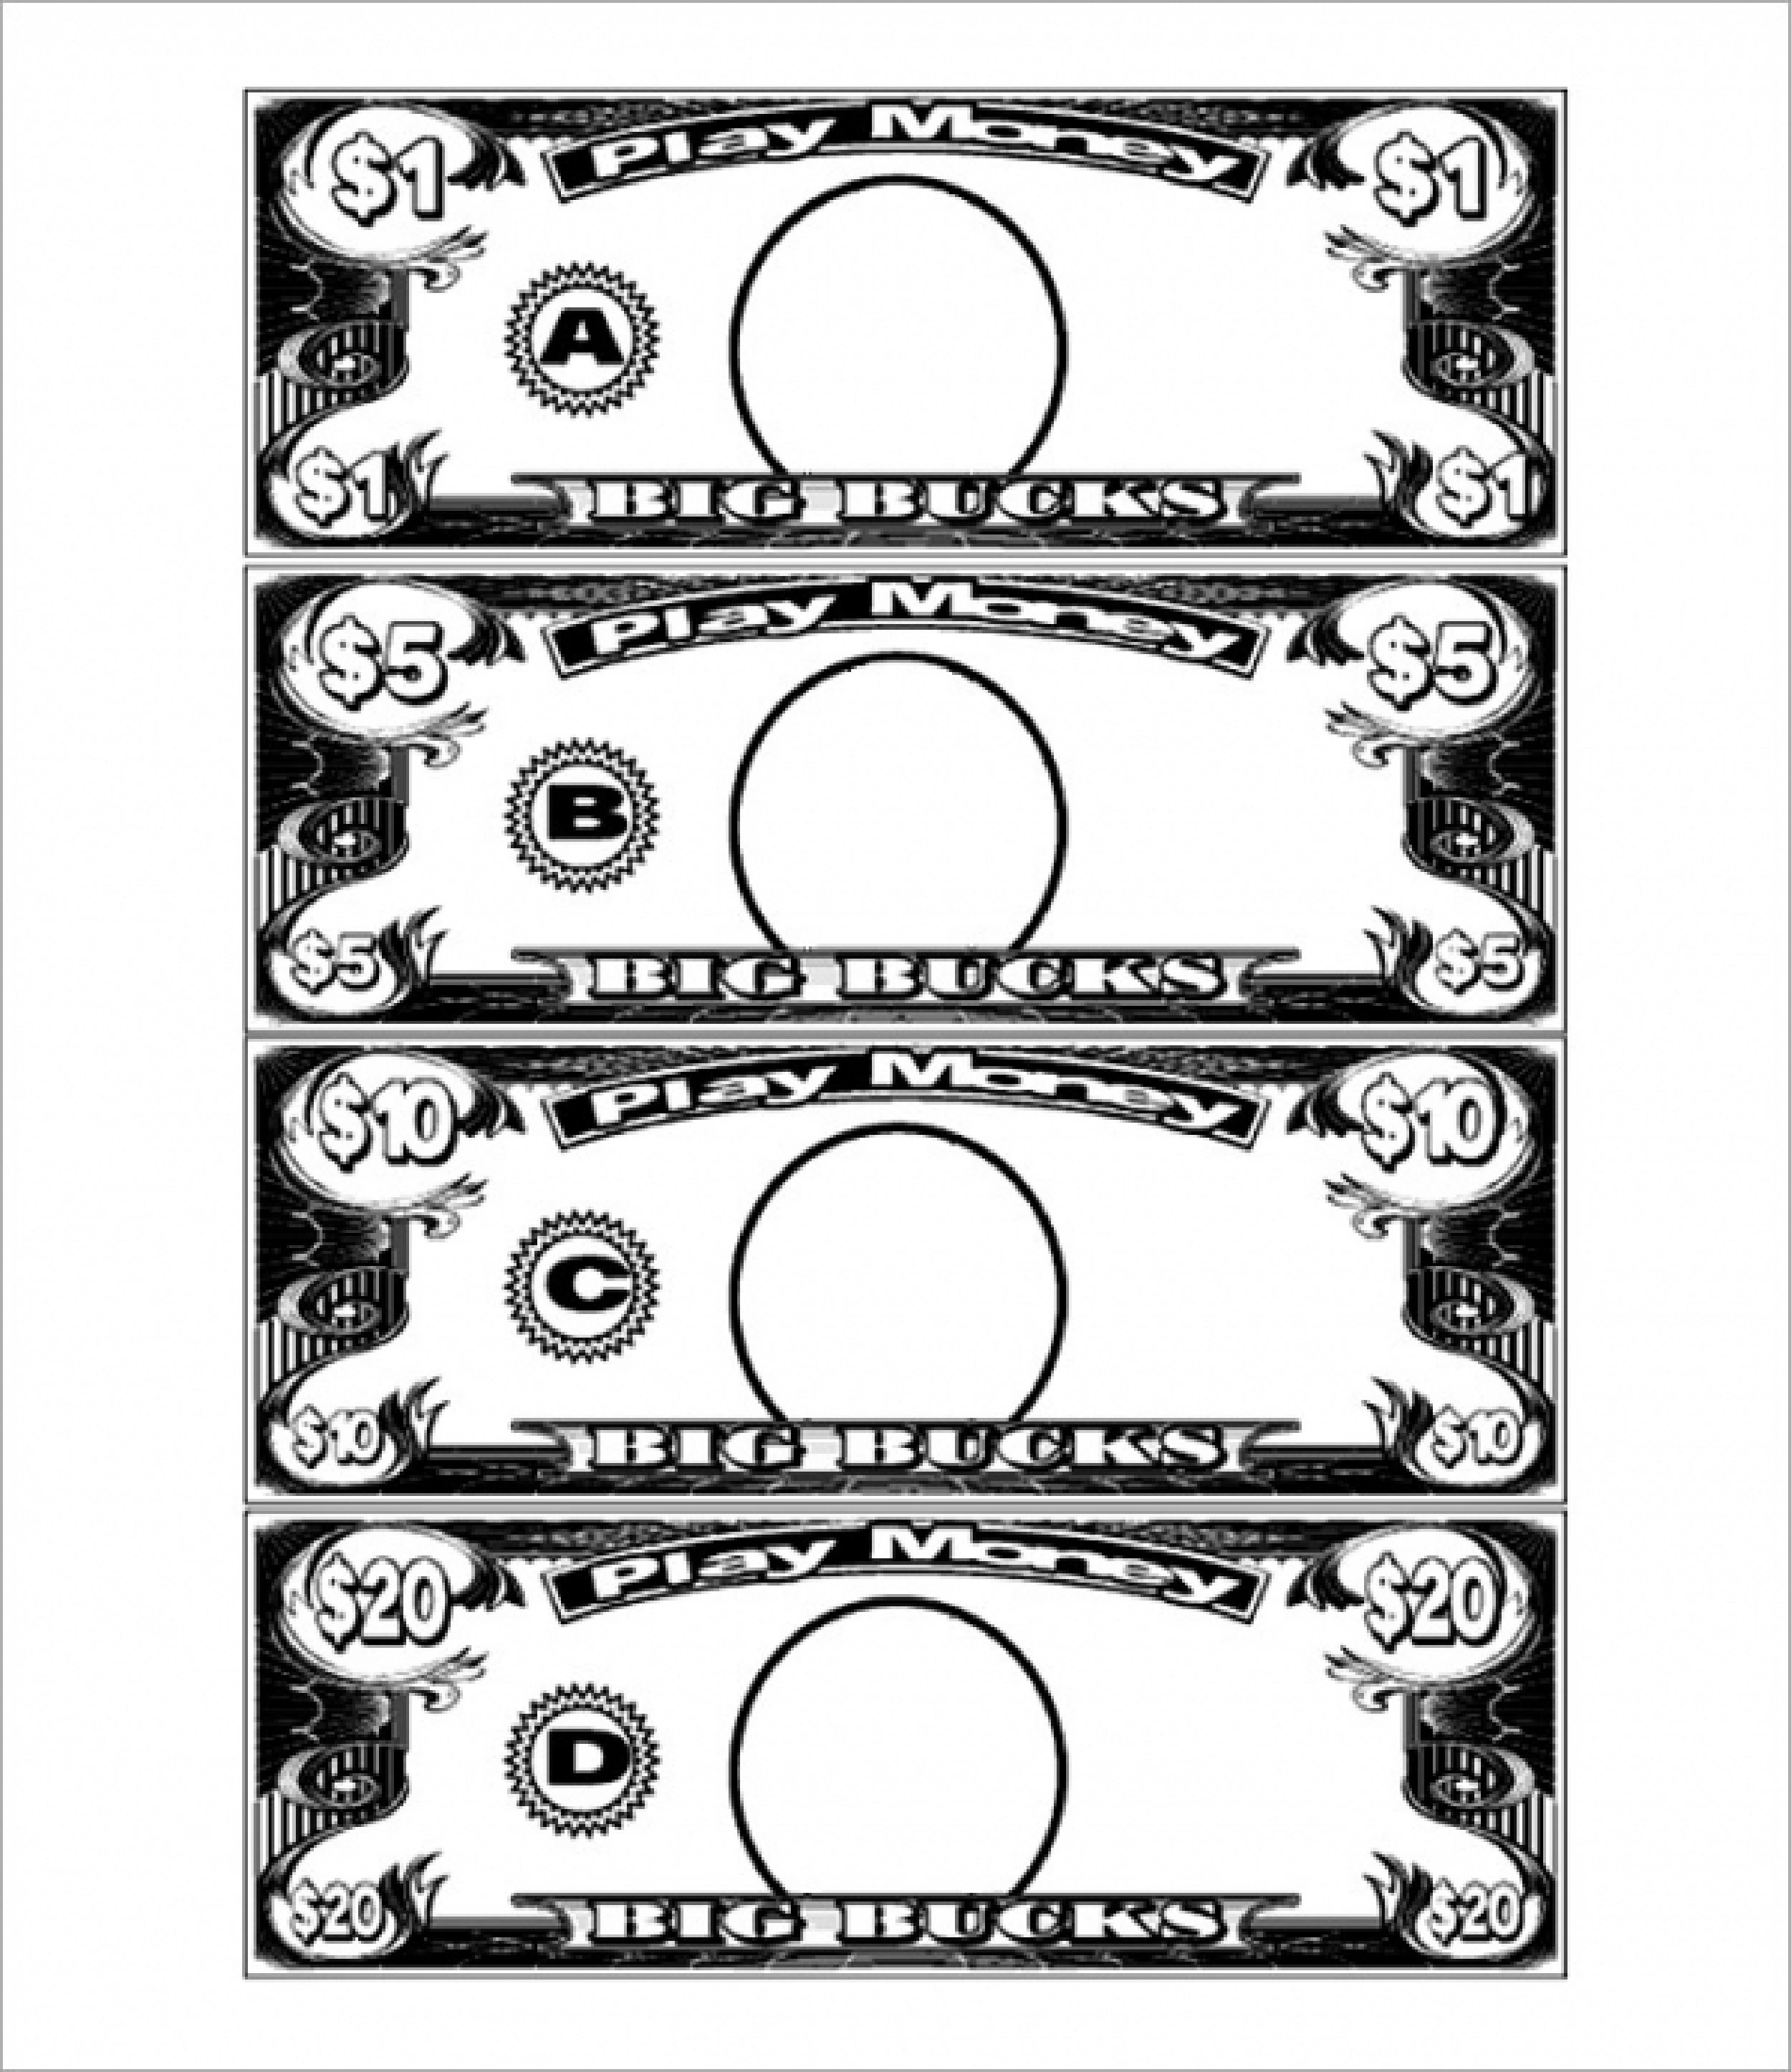 10 Bucks Play Money Template Looking For Printable Play Money 10 Dollar Bills Download This Printabl Play Money Template Money Template Printable Play Money